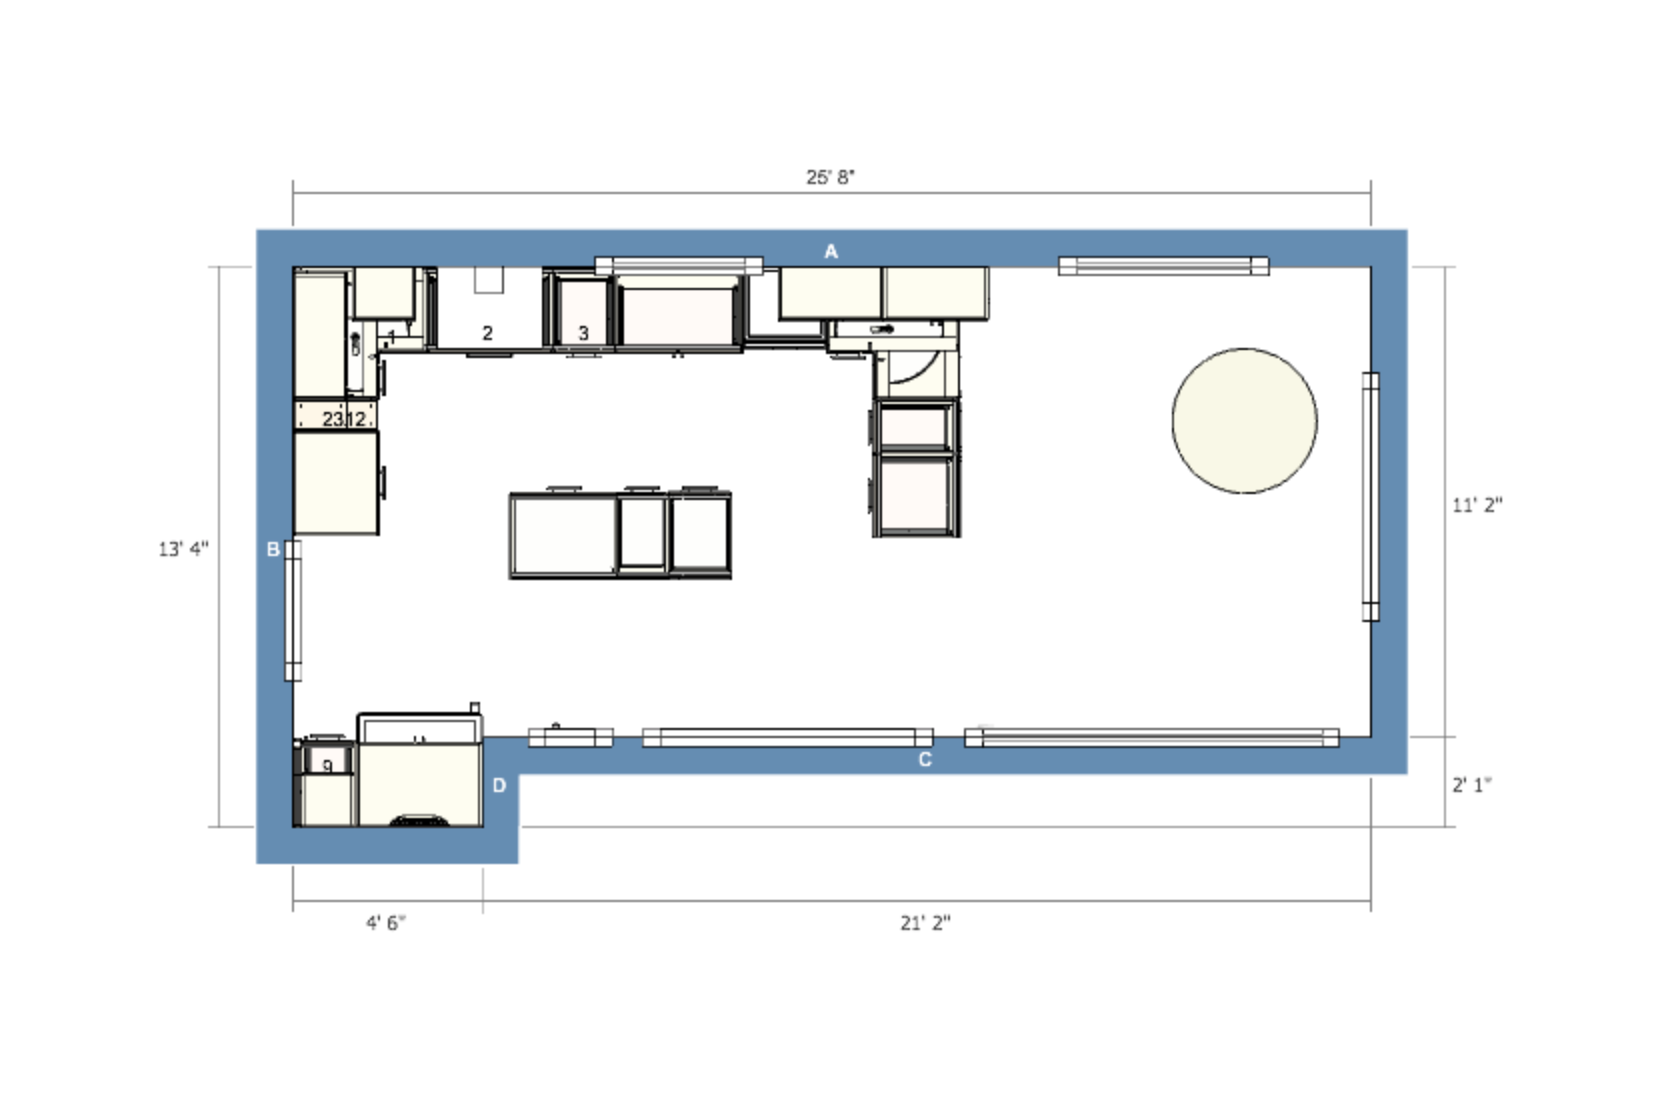 Planning our kitchen via the IKEA Kitchen Planner